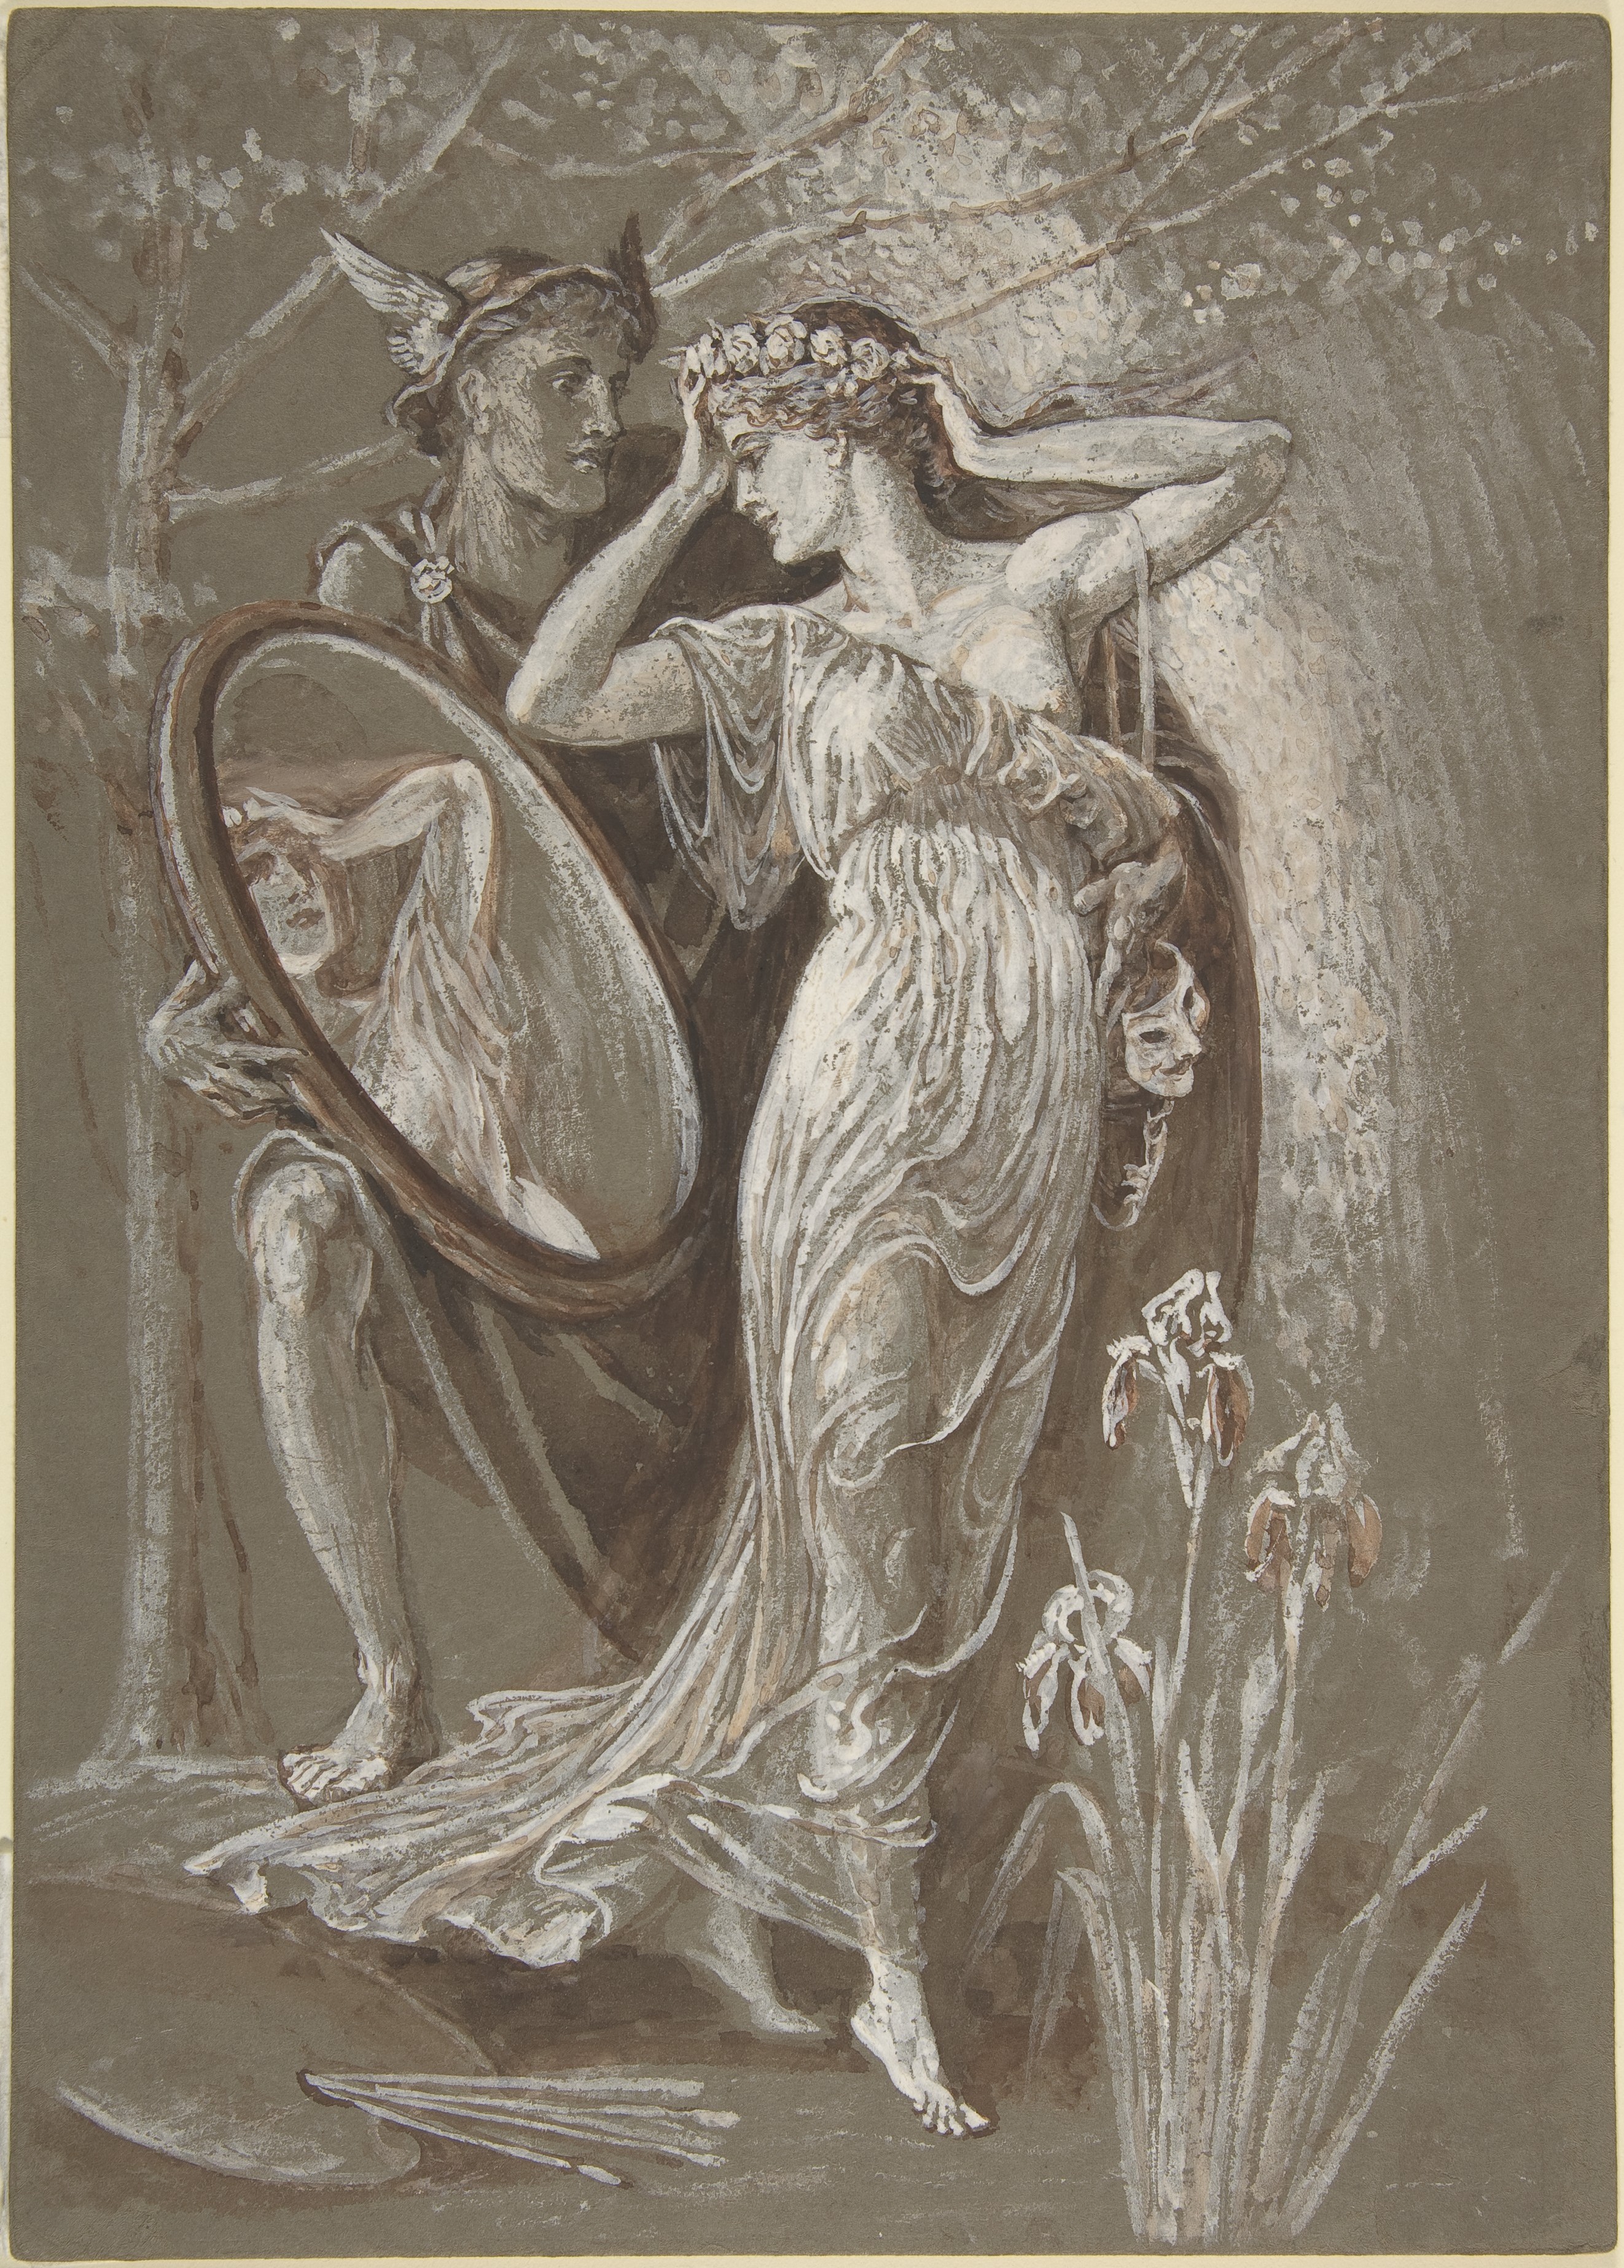 Walter Crane | The Mirror of Venus, or L'Art et Vie (Art and Life